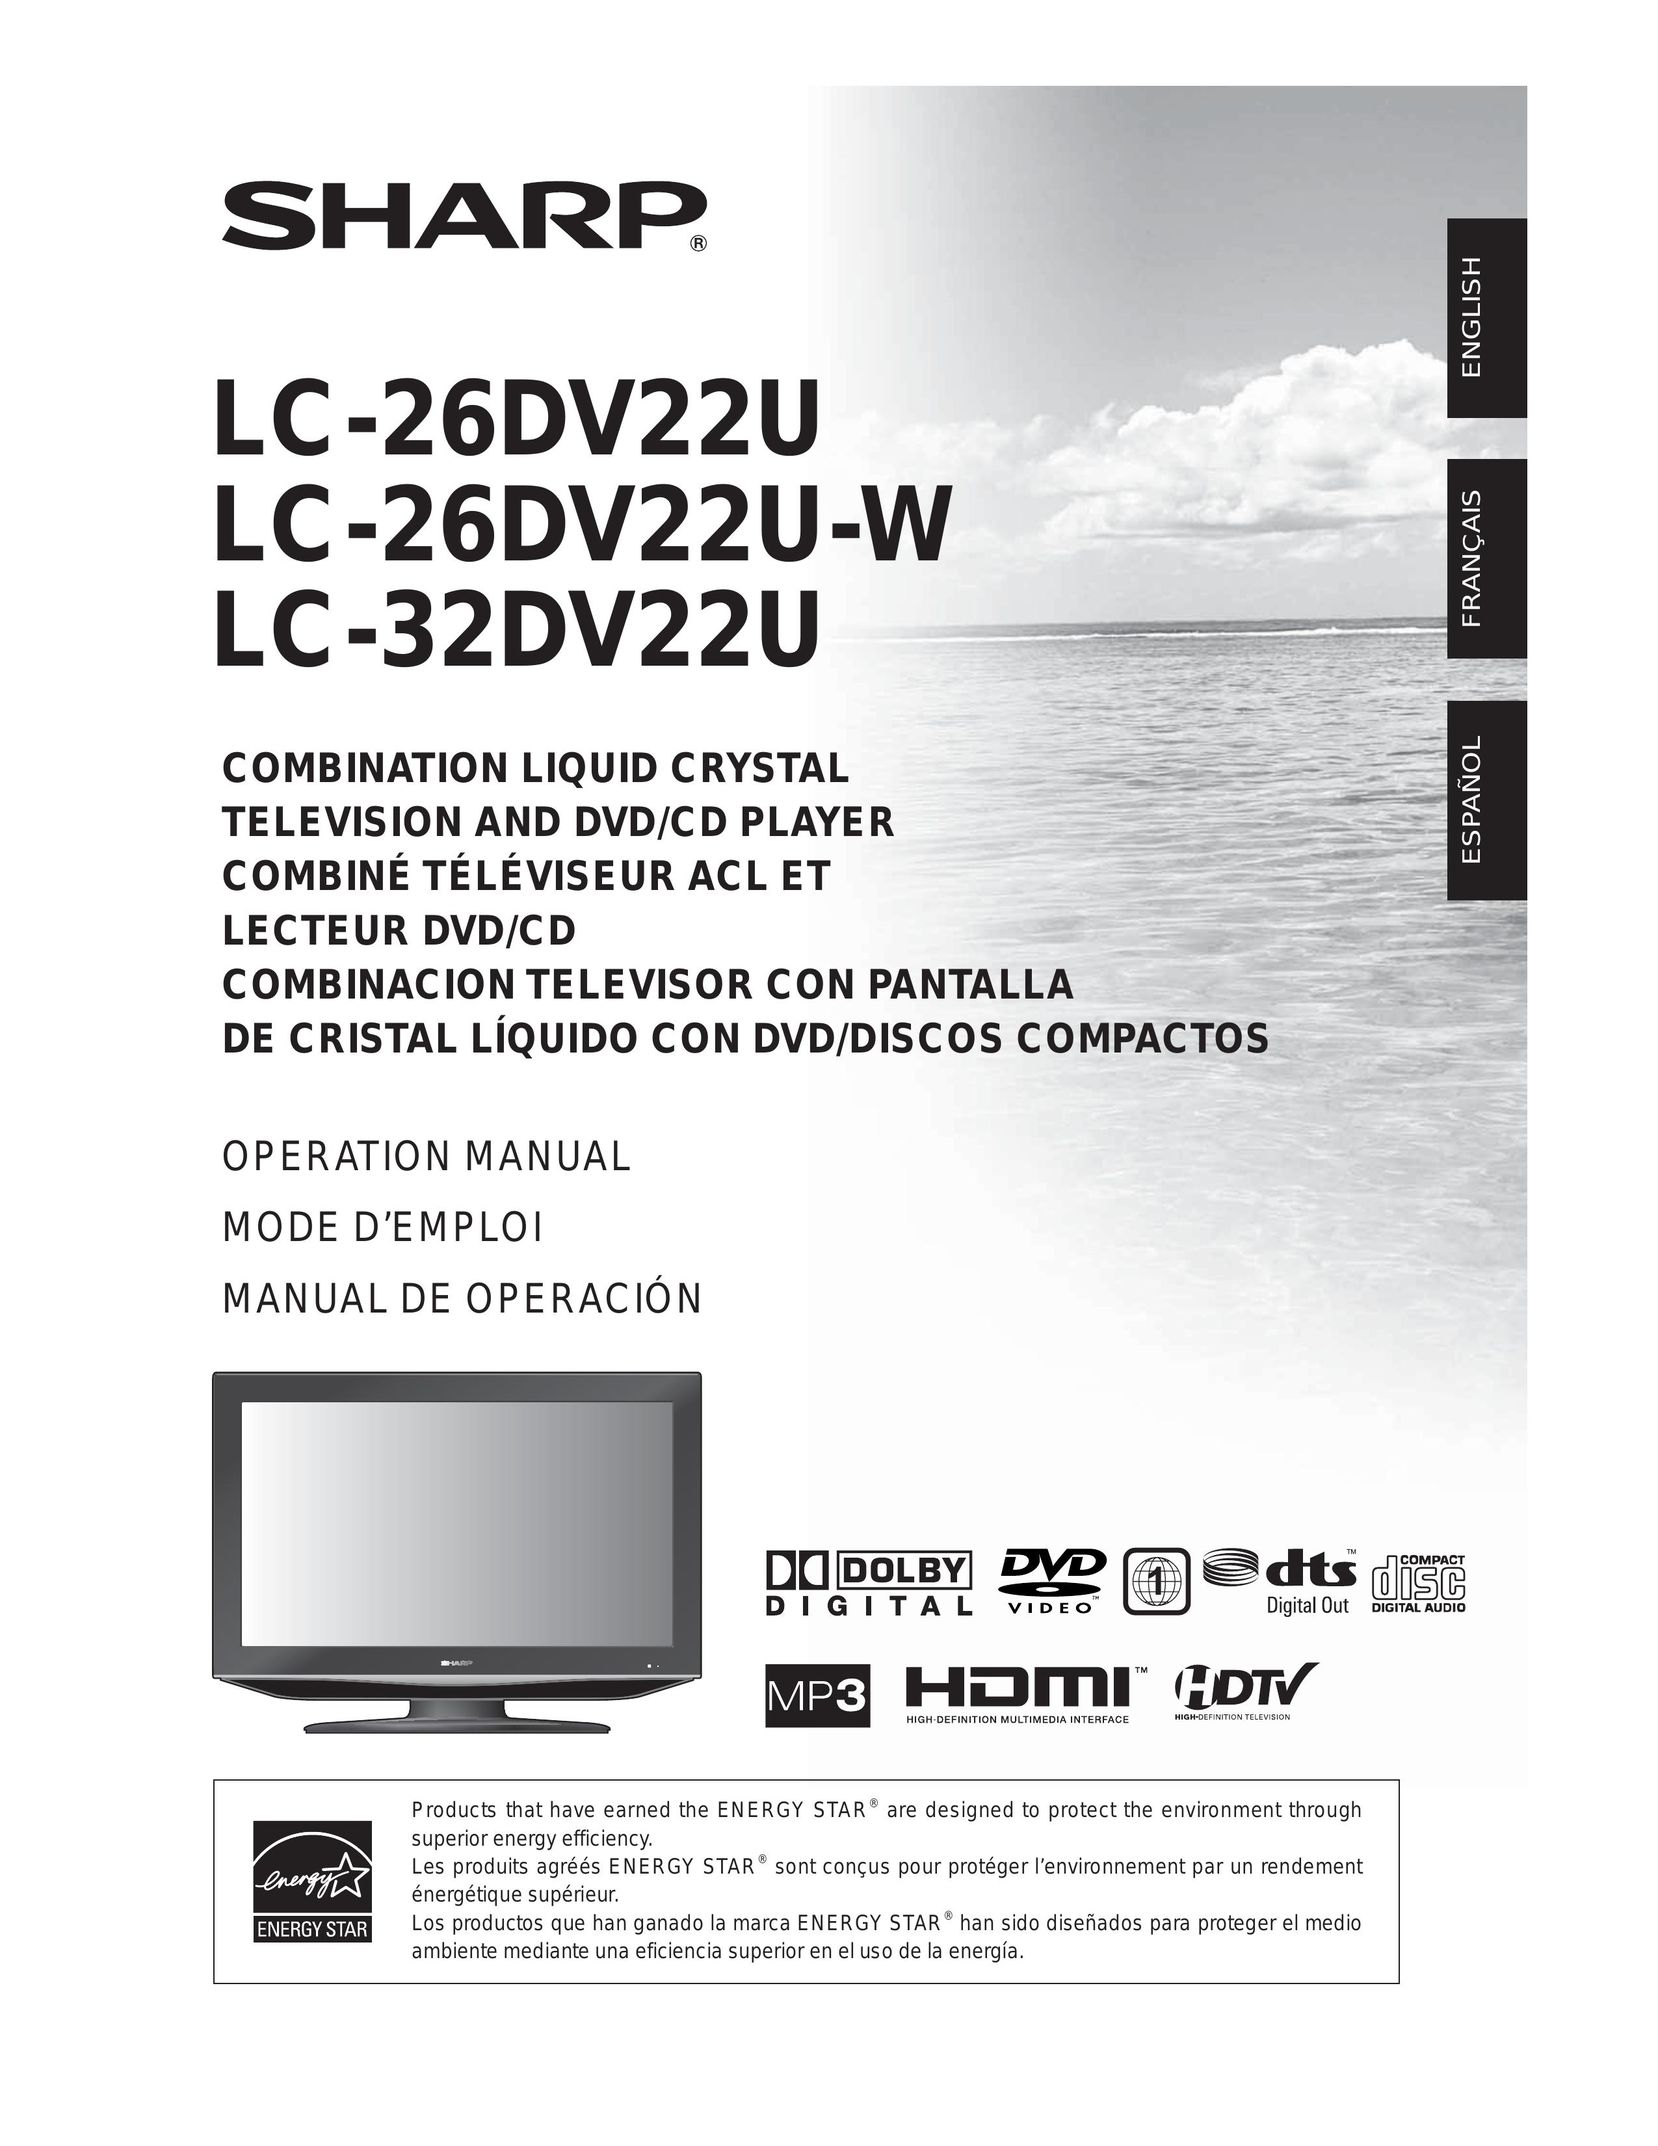 Sharp LC-26DV22U TV DVD Combo User Manual